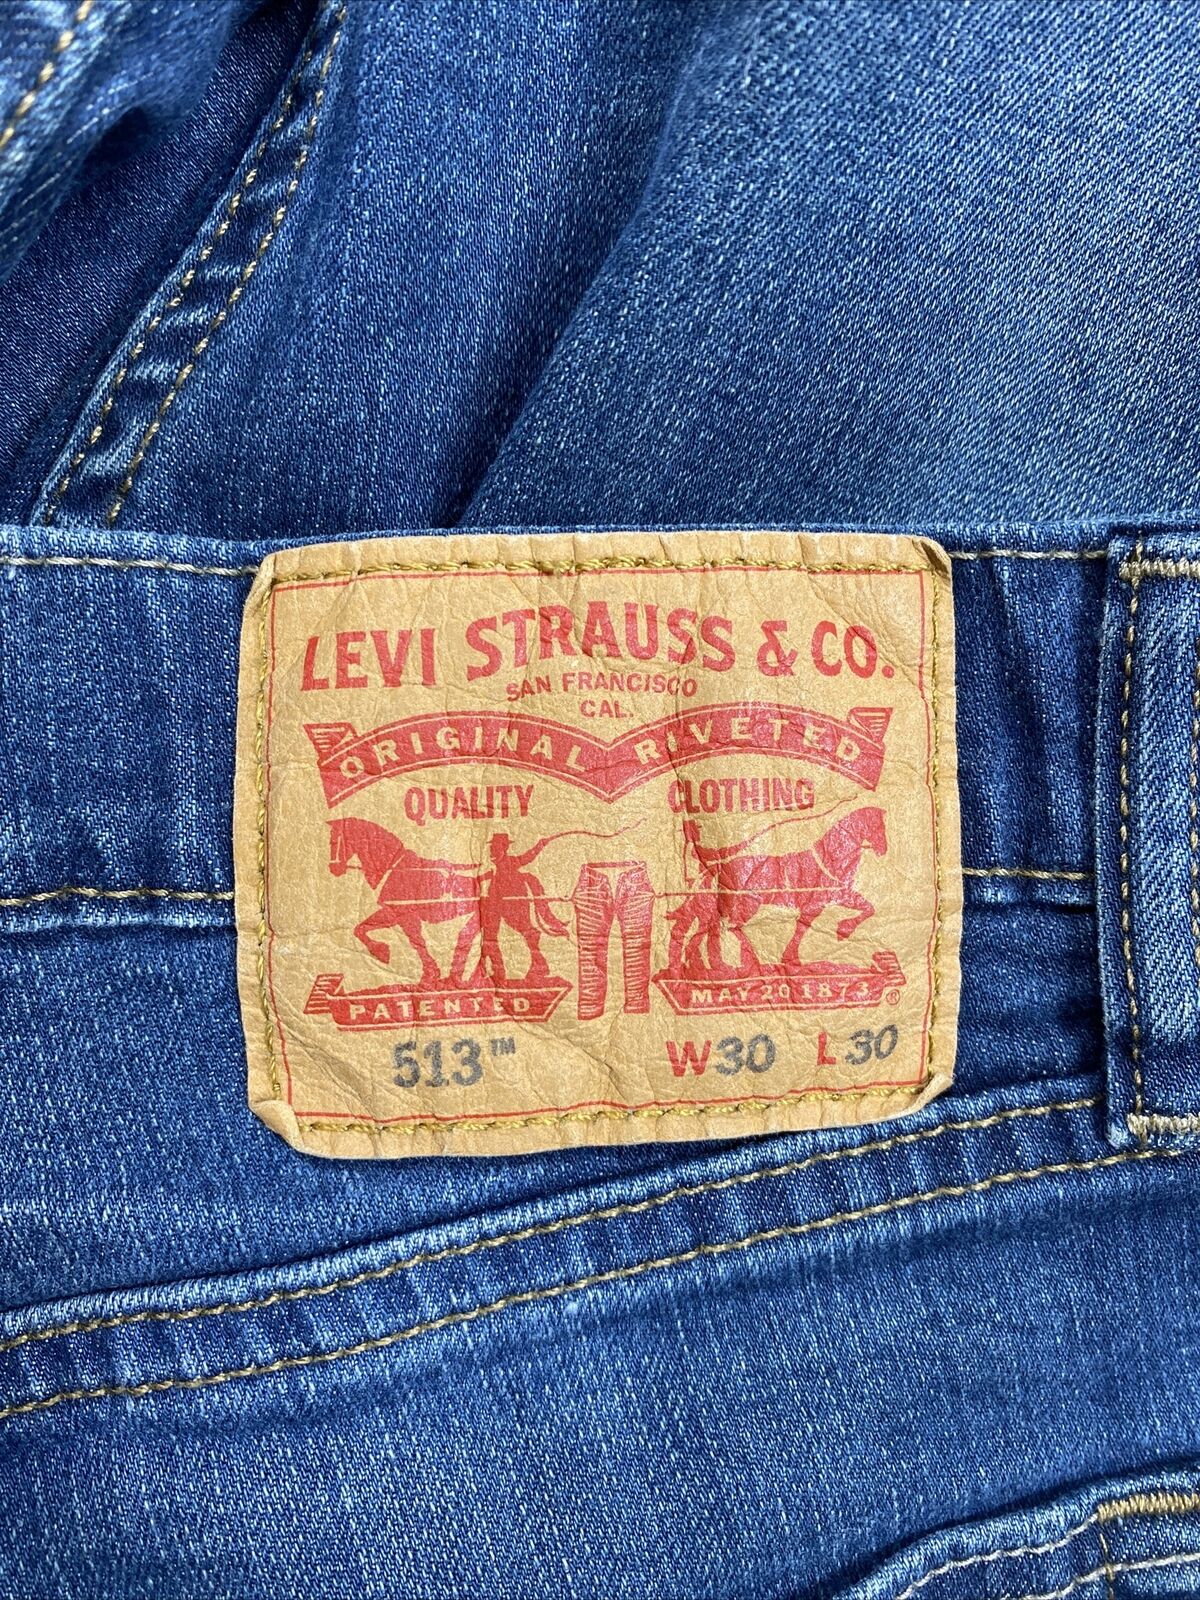 Levis Men's Medium Wash Slim Straight Denim Jeans - 30x30